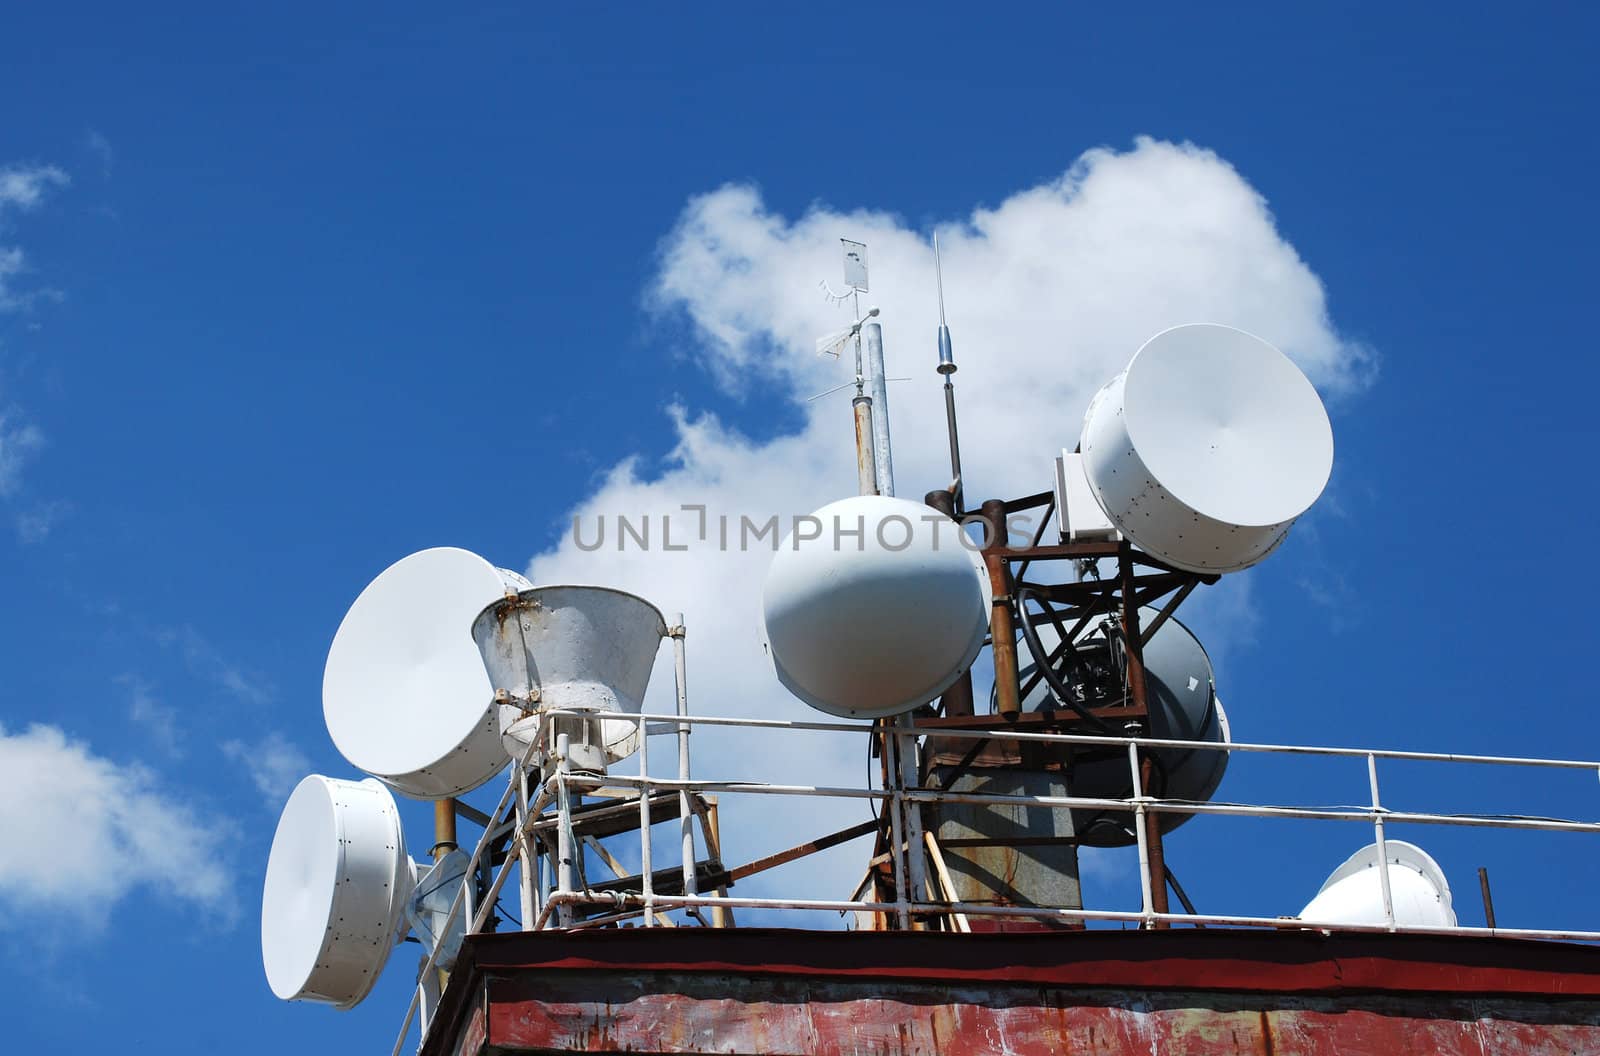 Mountain peak antennas and communication equipment on blue-sky background